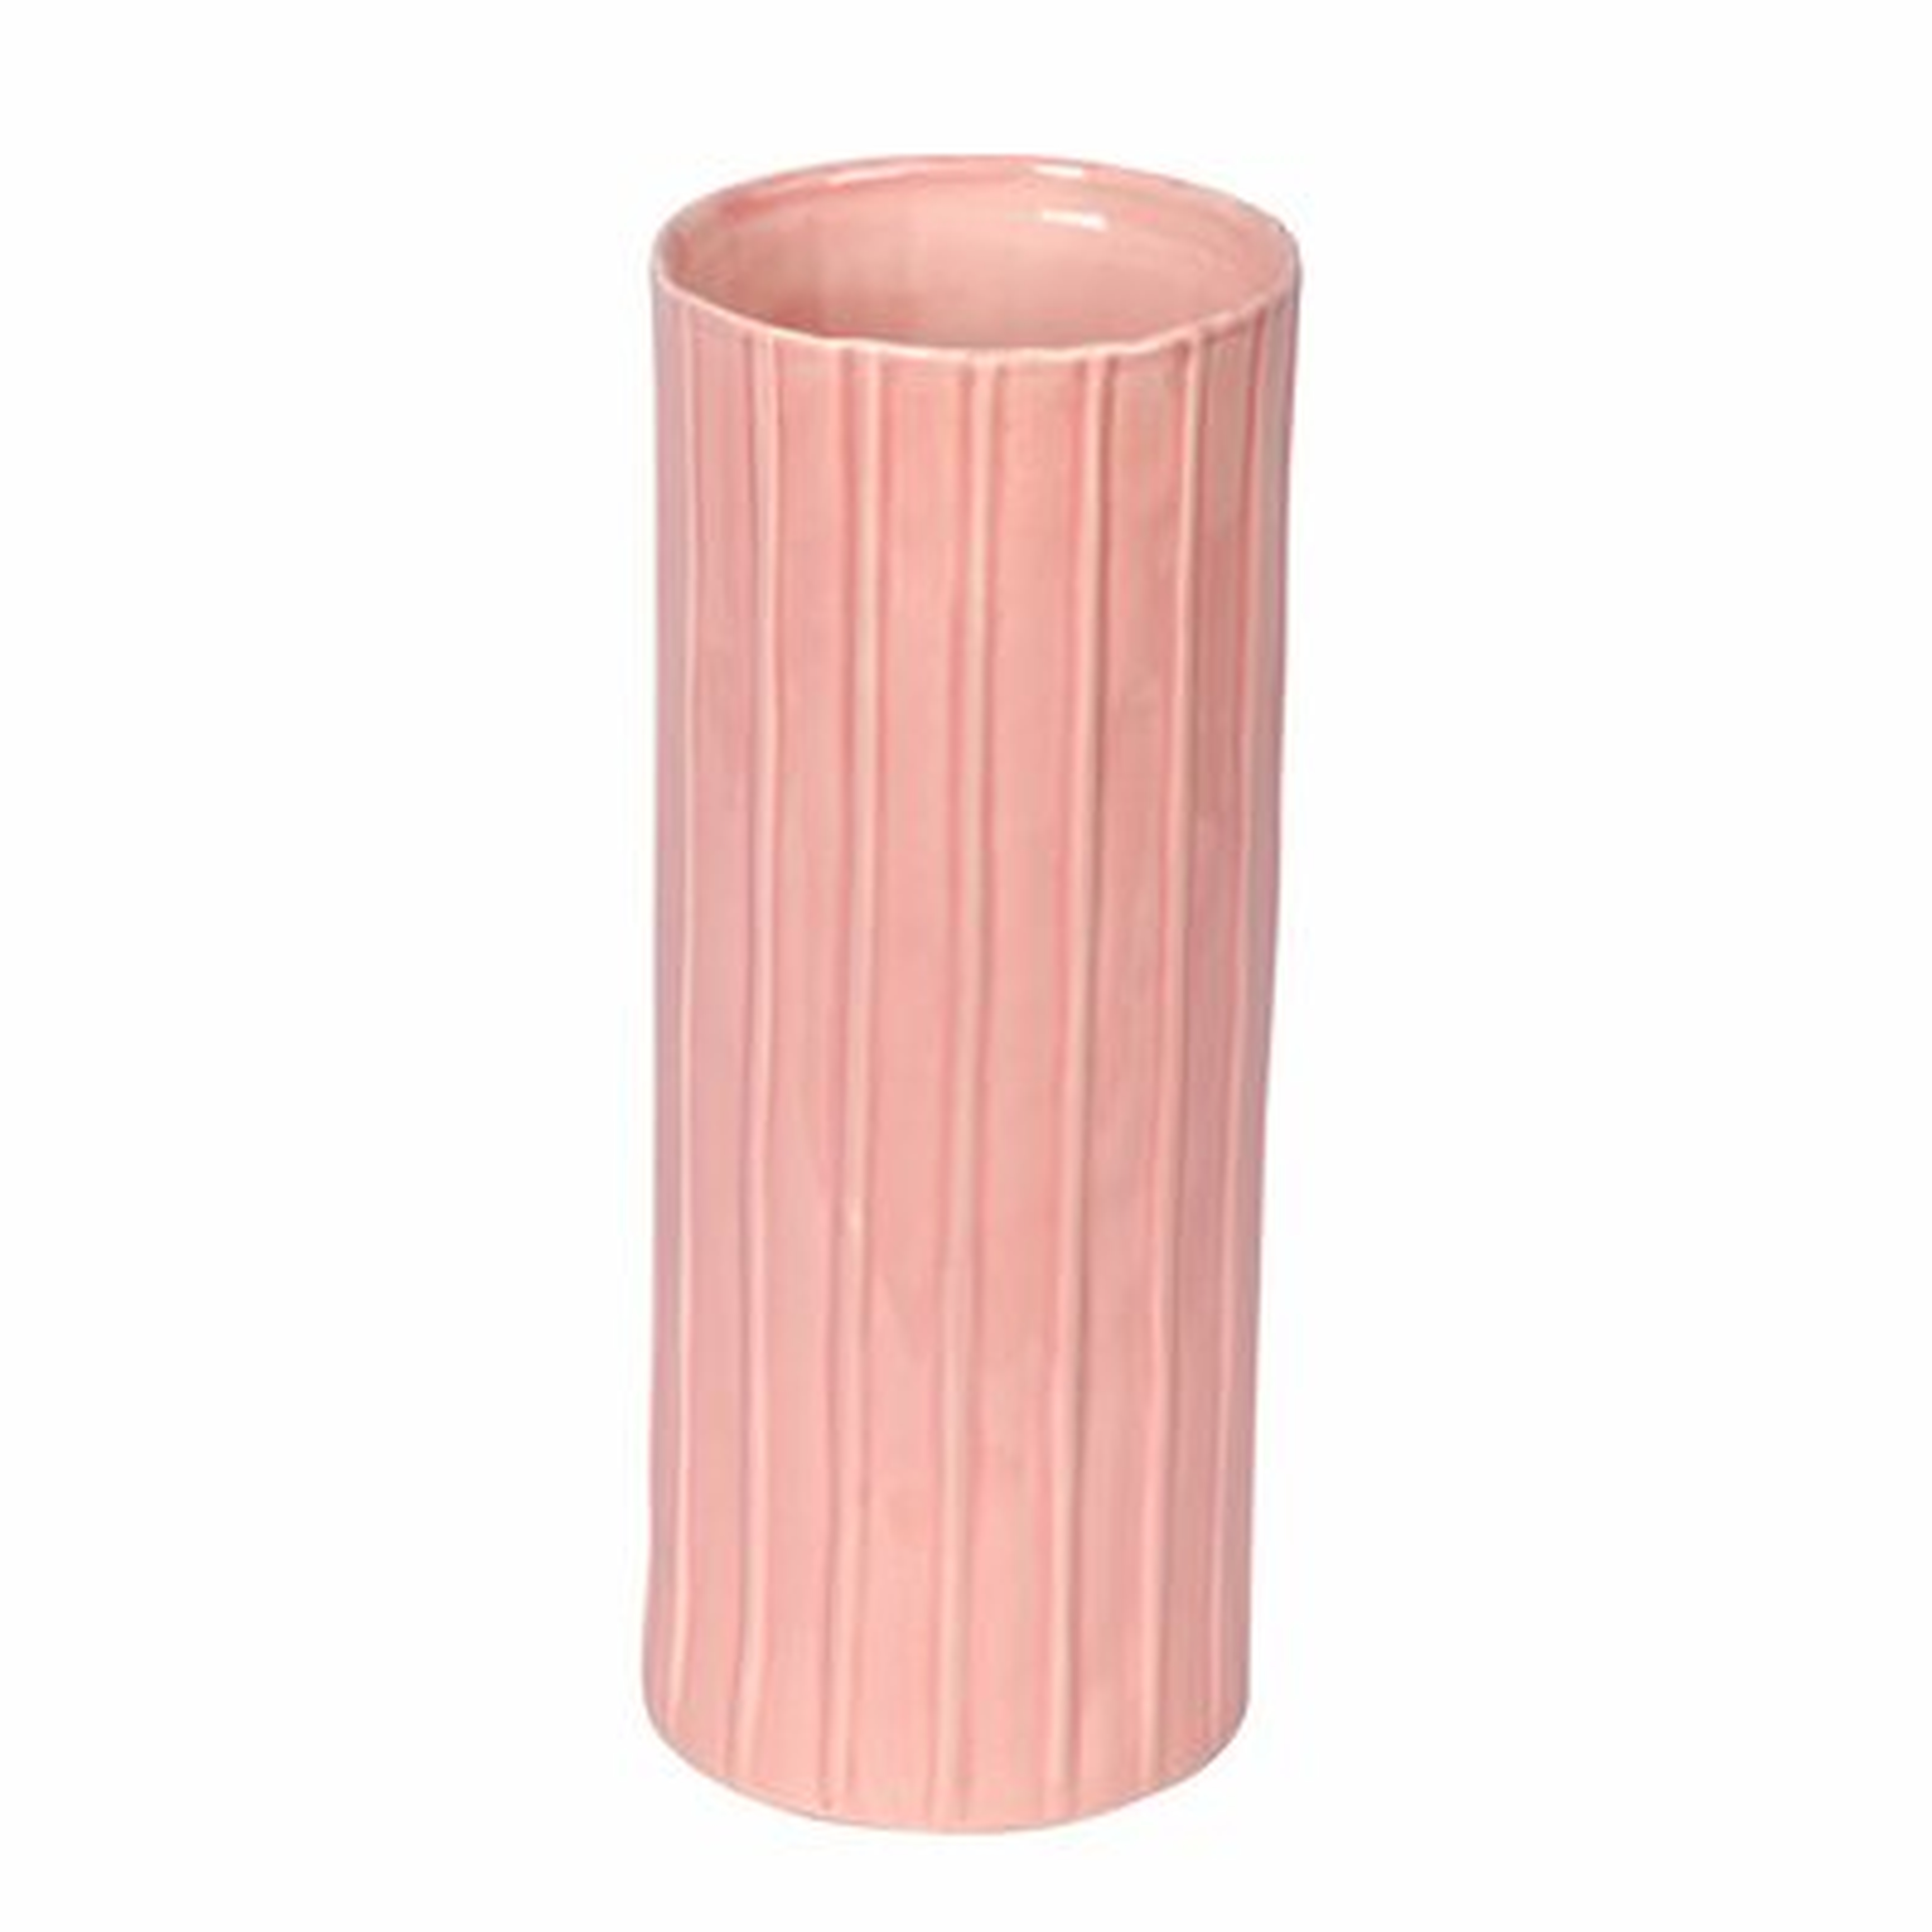 Mccomas Ceramic Table vase - Wayfair